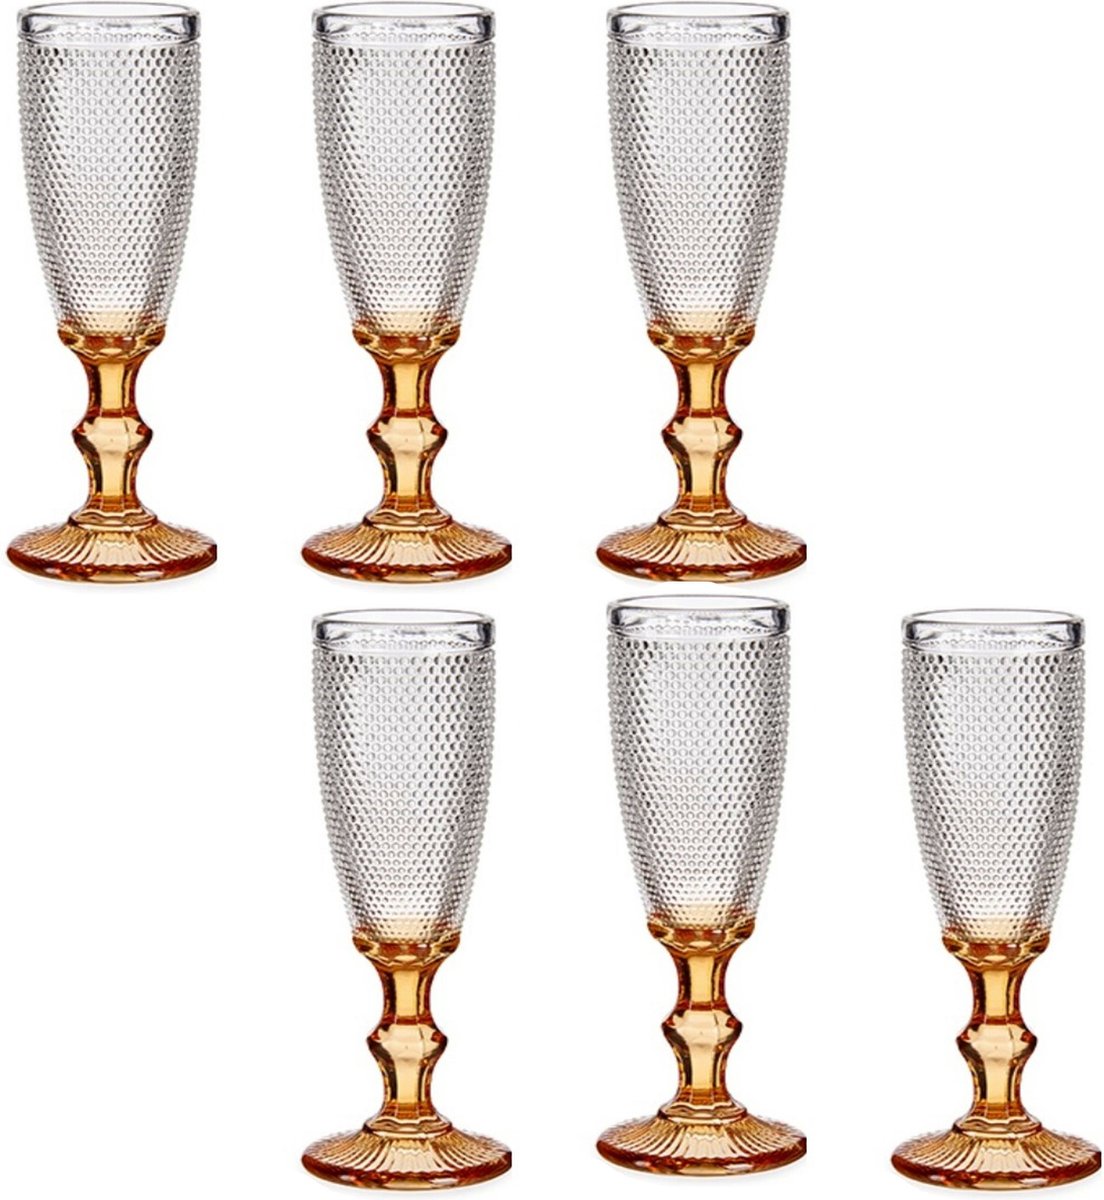 Vivalto - Luxe Champagneglazen Monaco serie set 12x op goud voet 180 ml